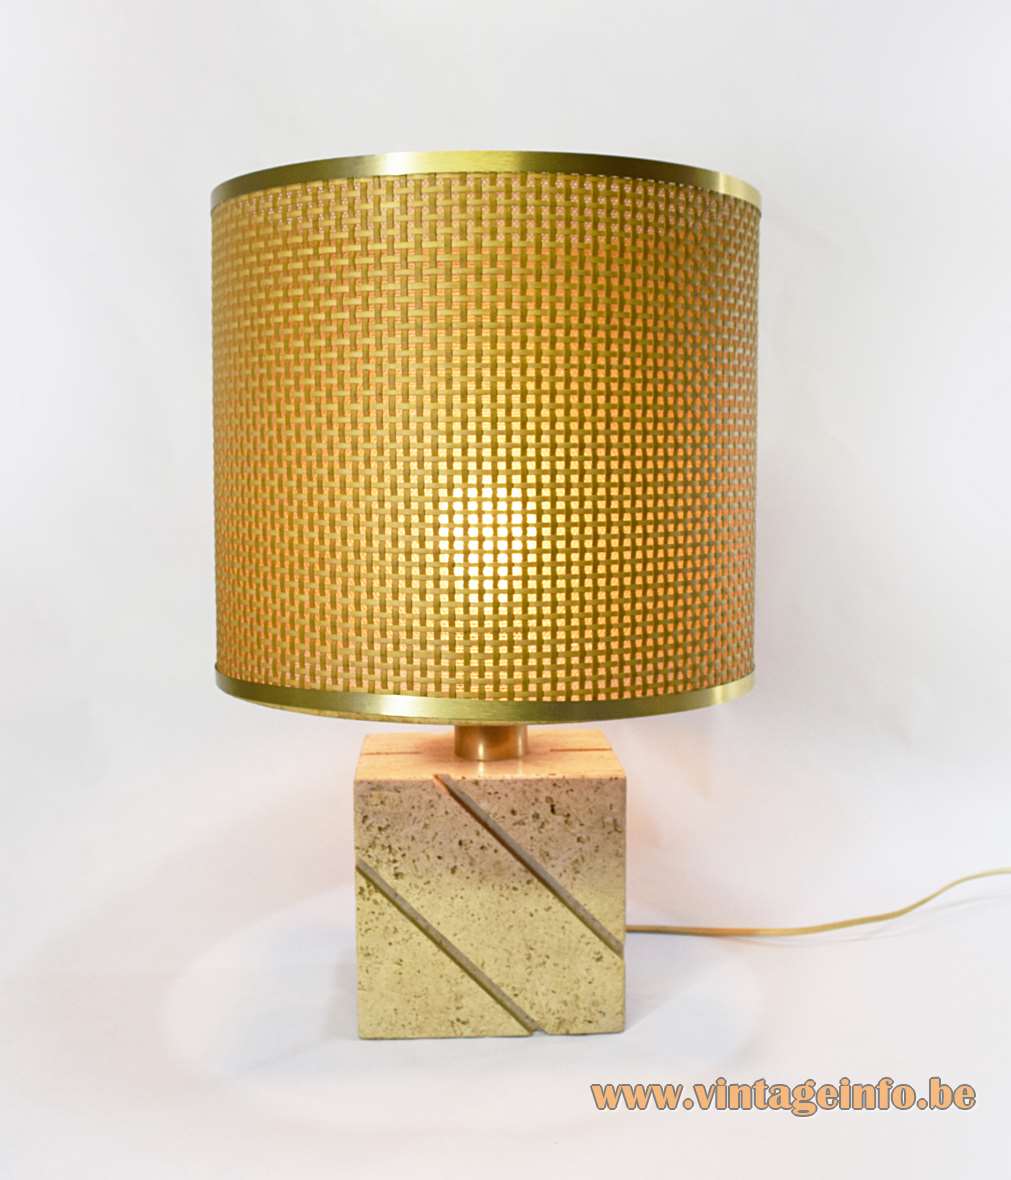 Fratelli Mannelli travertine table lamp rectangular limestone base cane reed wicker round lampshade E27 socket 1960s